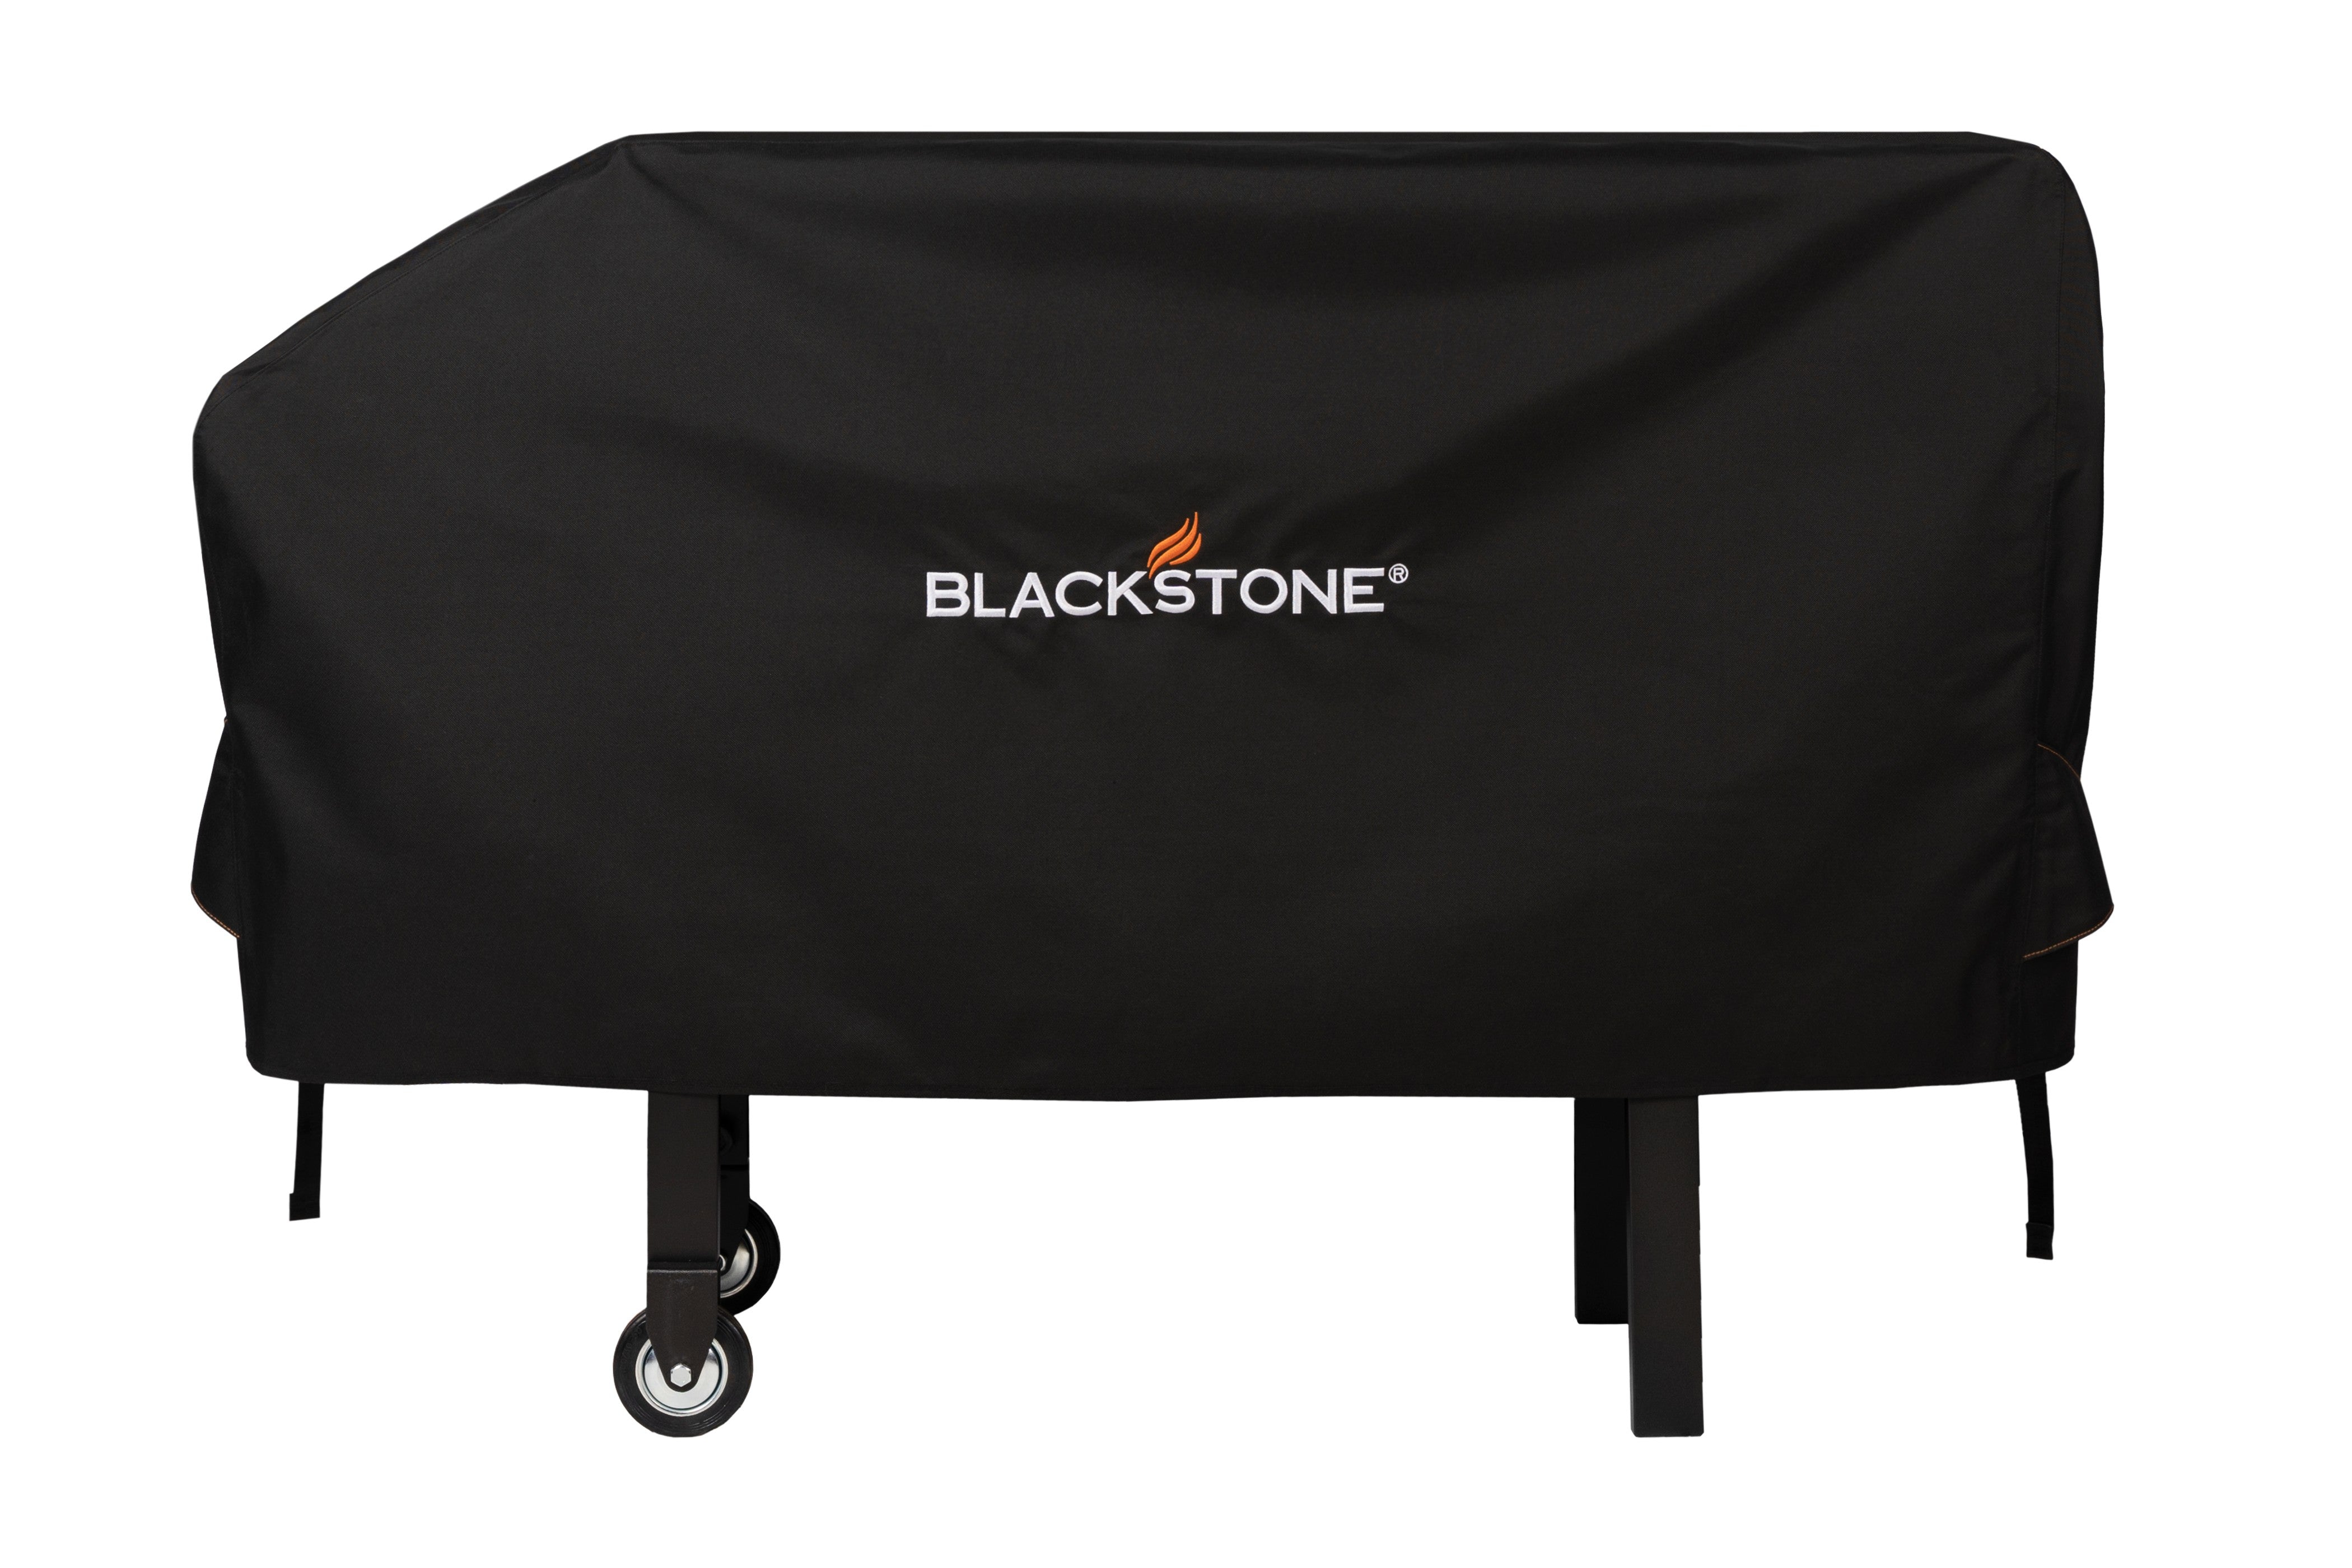 Blackstone 22" Griddle Cover - 5091